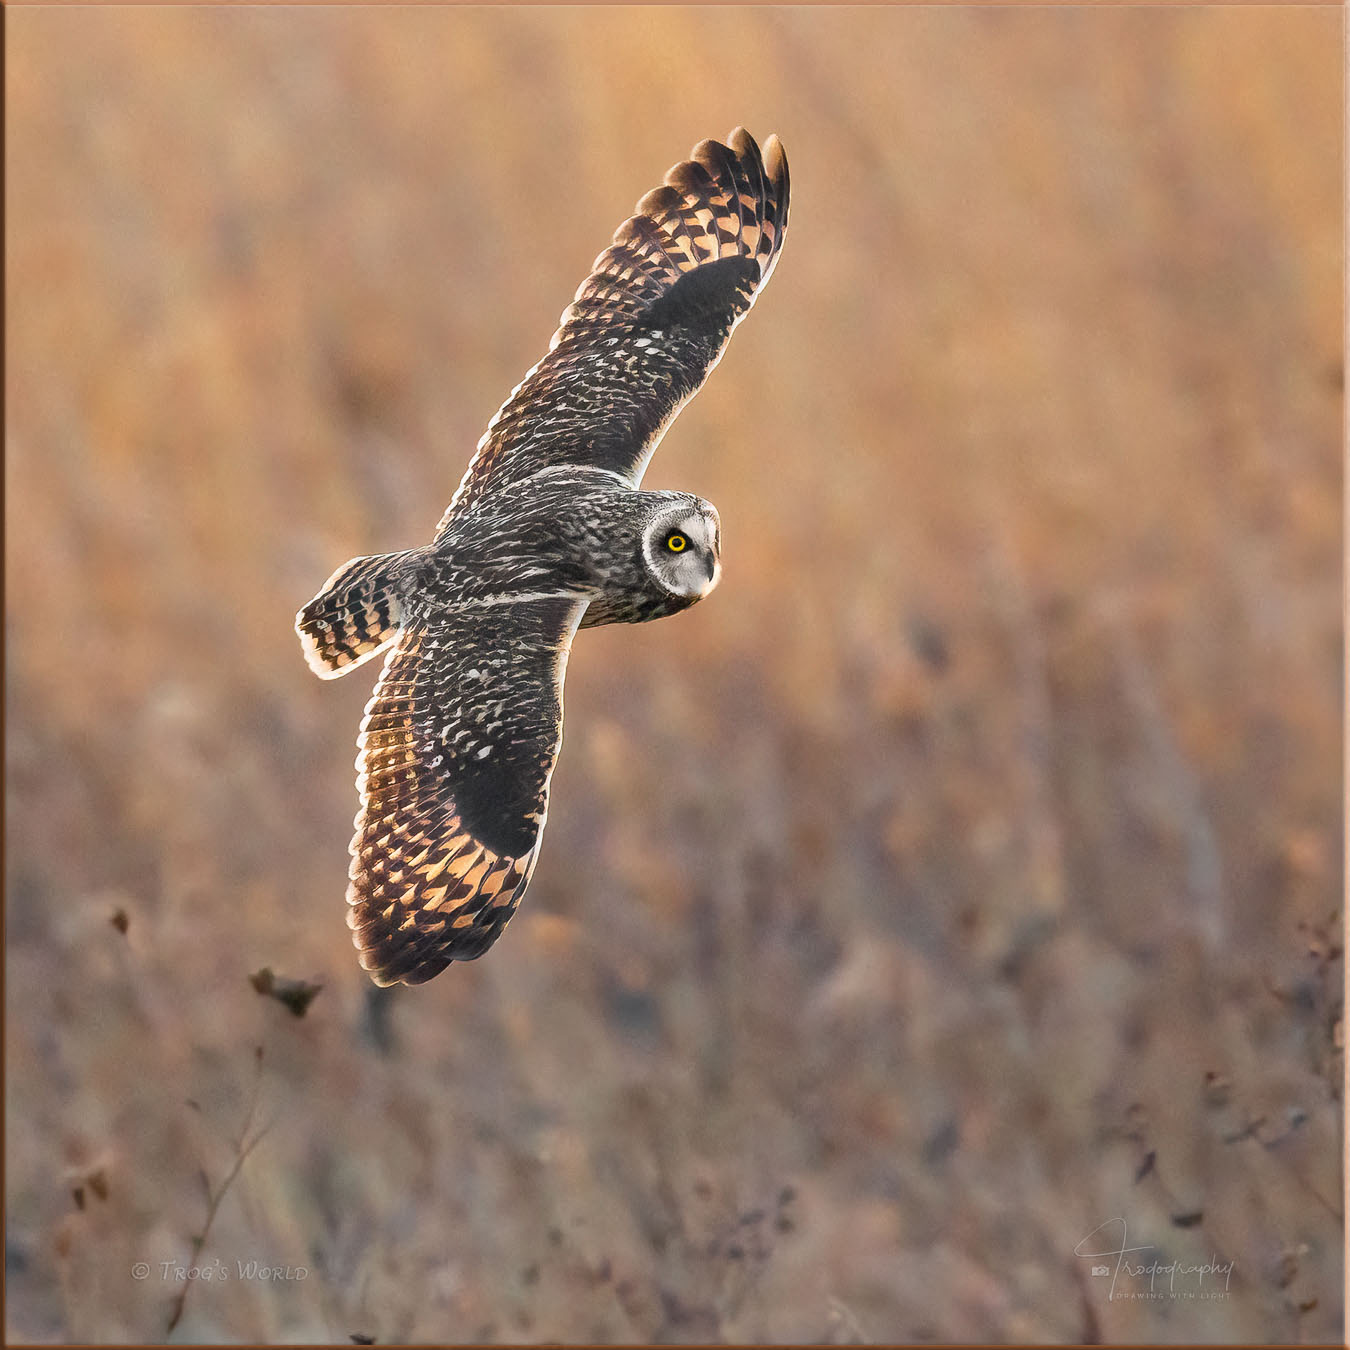 Short-eared Owl in flight during evening